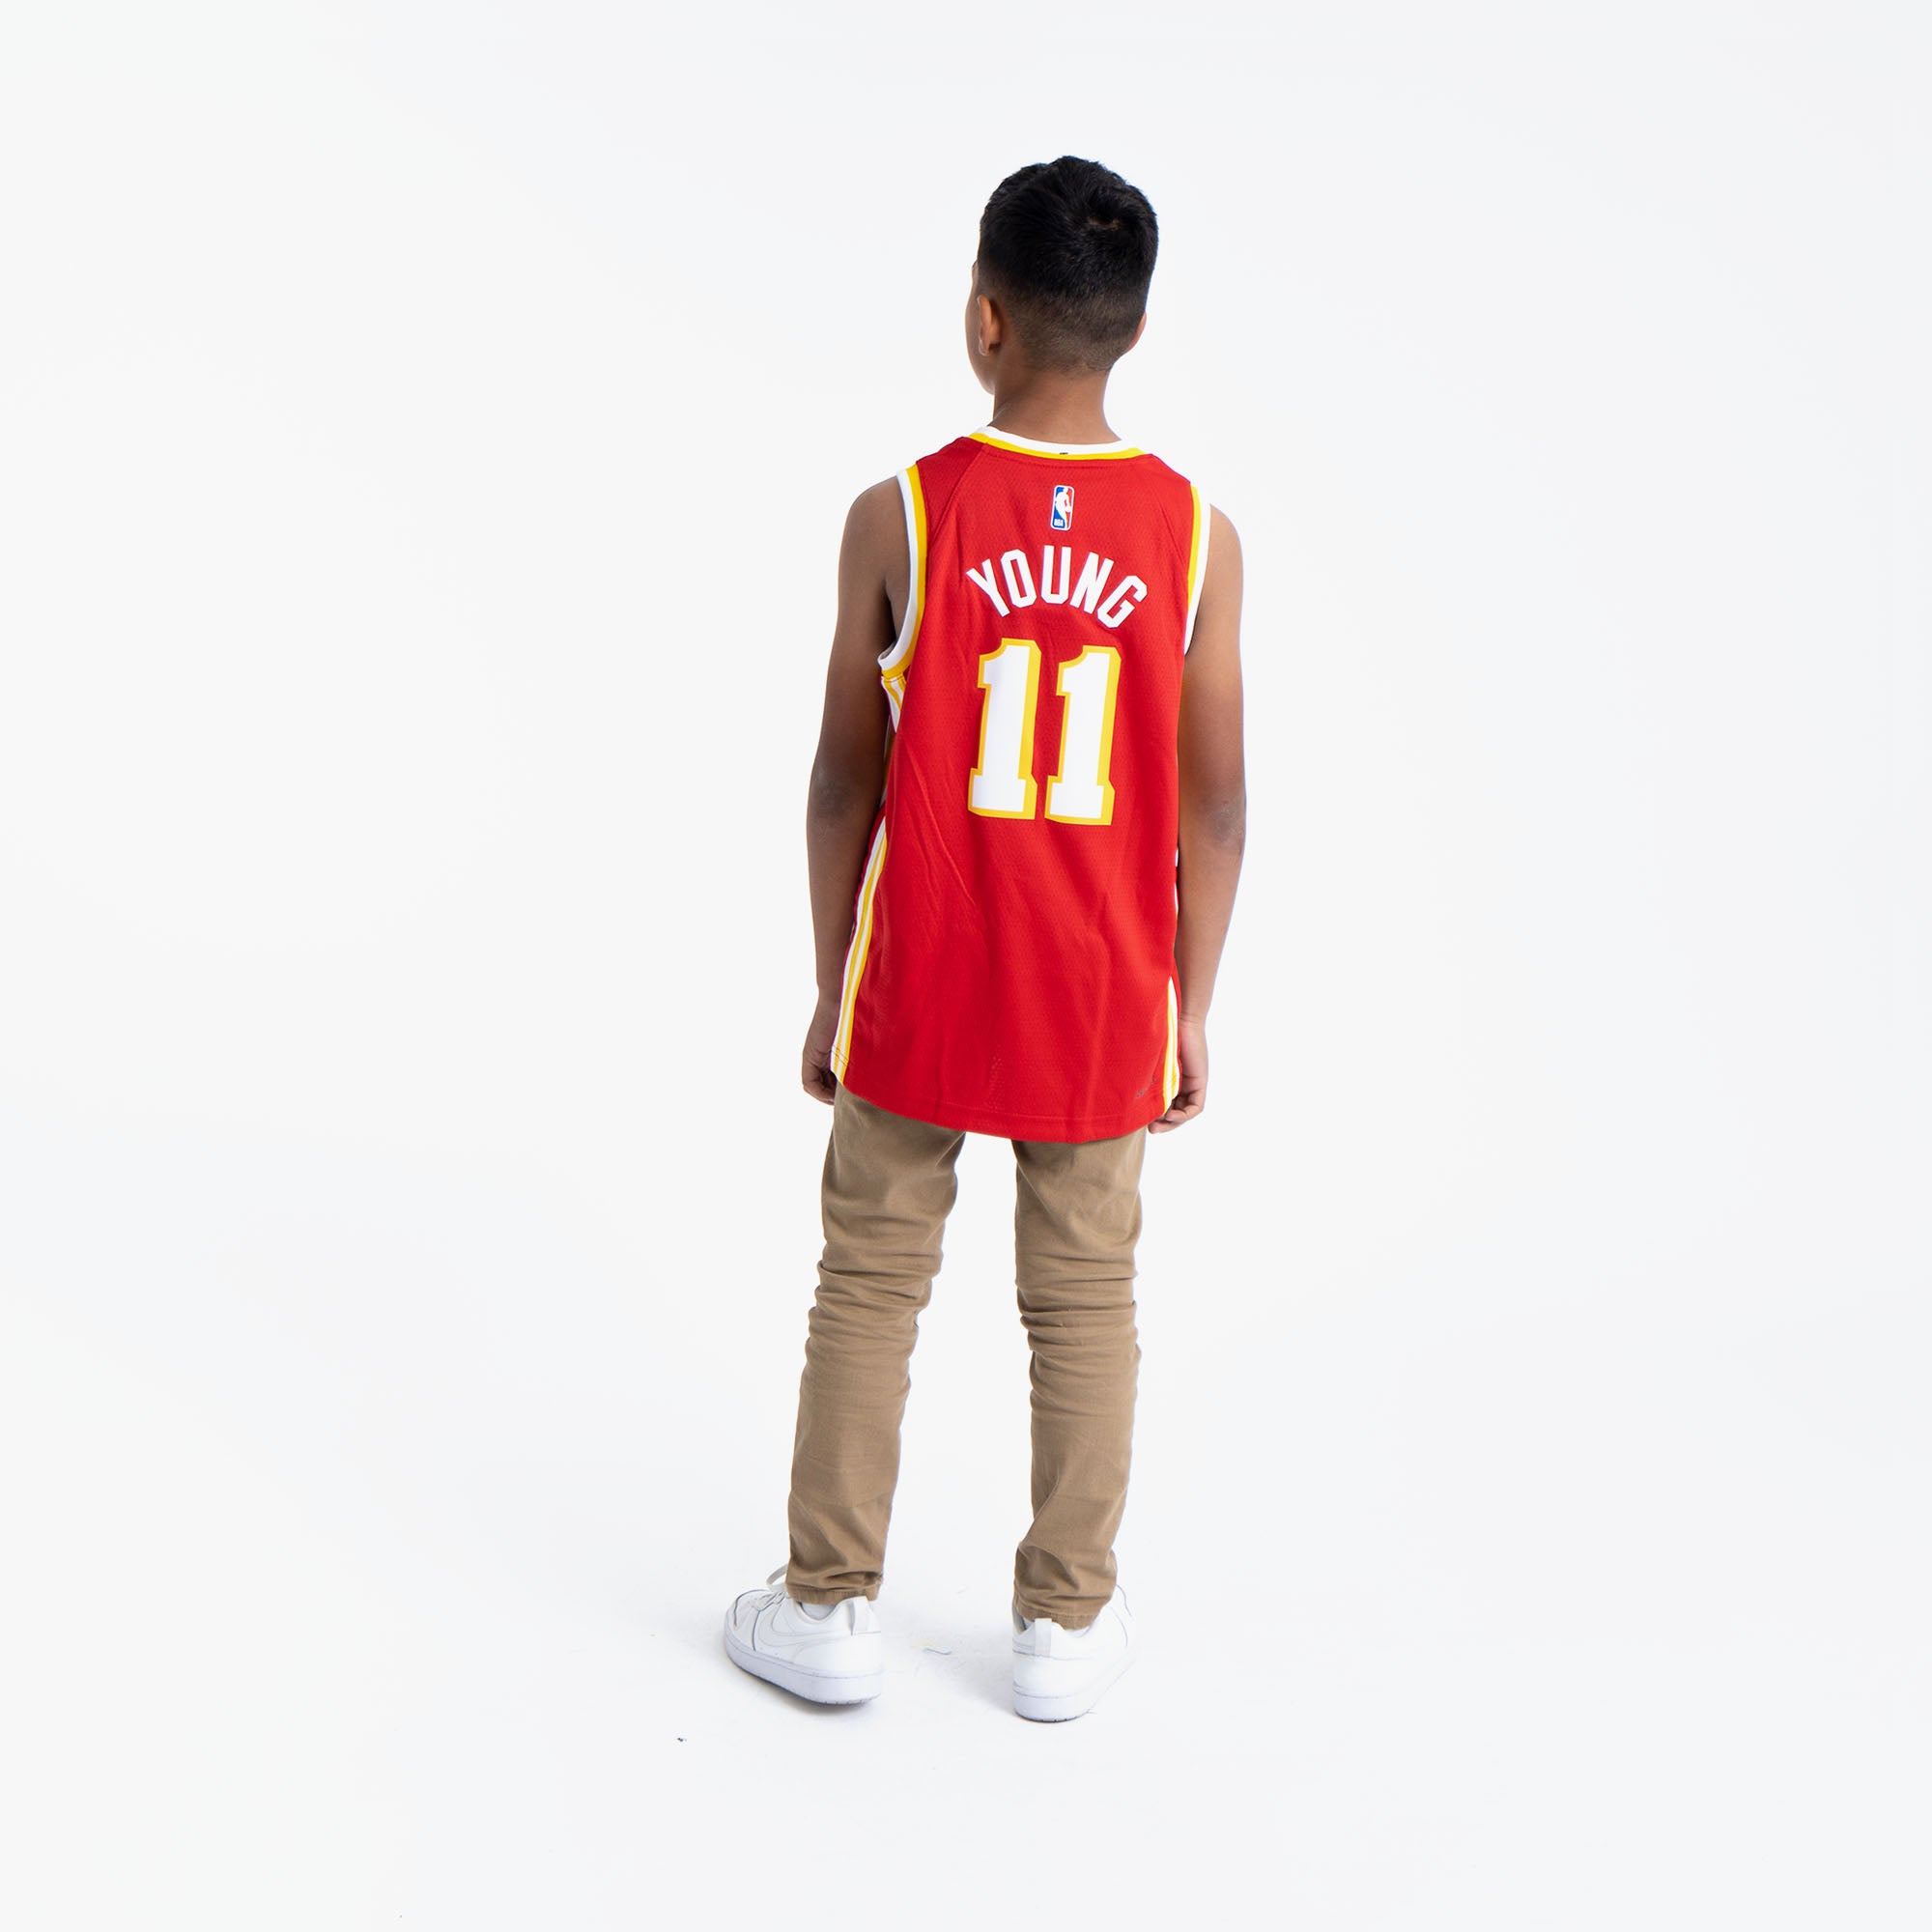 Men's Nike Trae Young Red Atlanta Hawks Swingman Jersey - Icon Edition